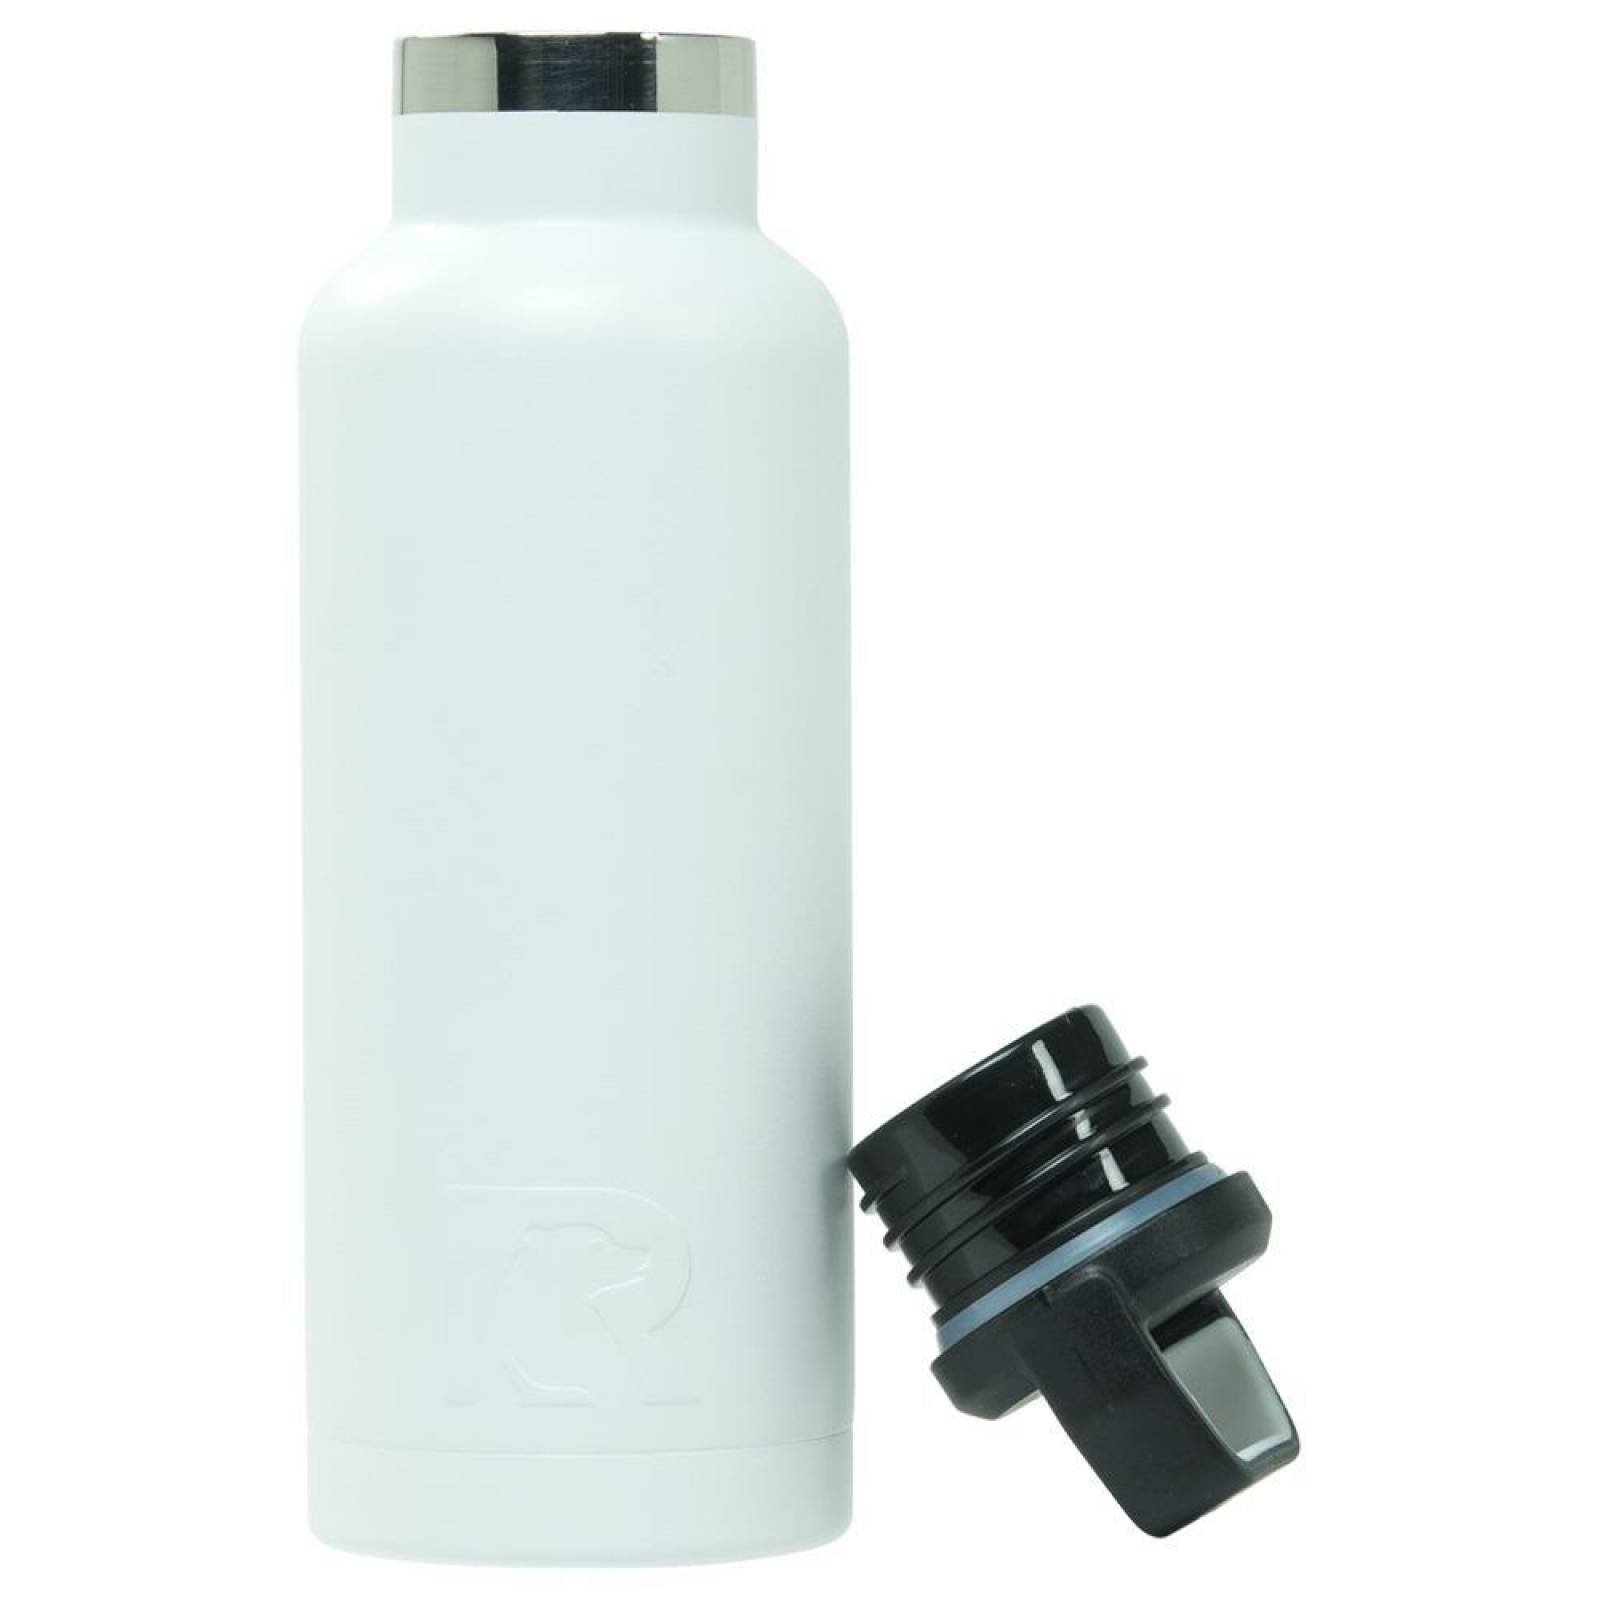 RTIC Water Bottle 16 oz. White   679